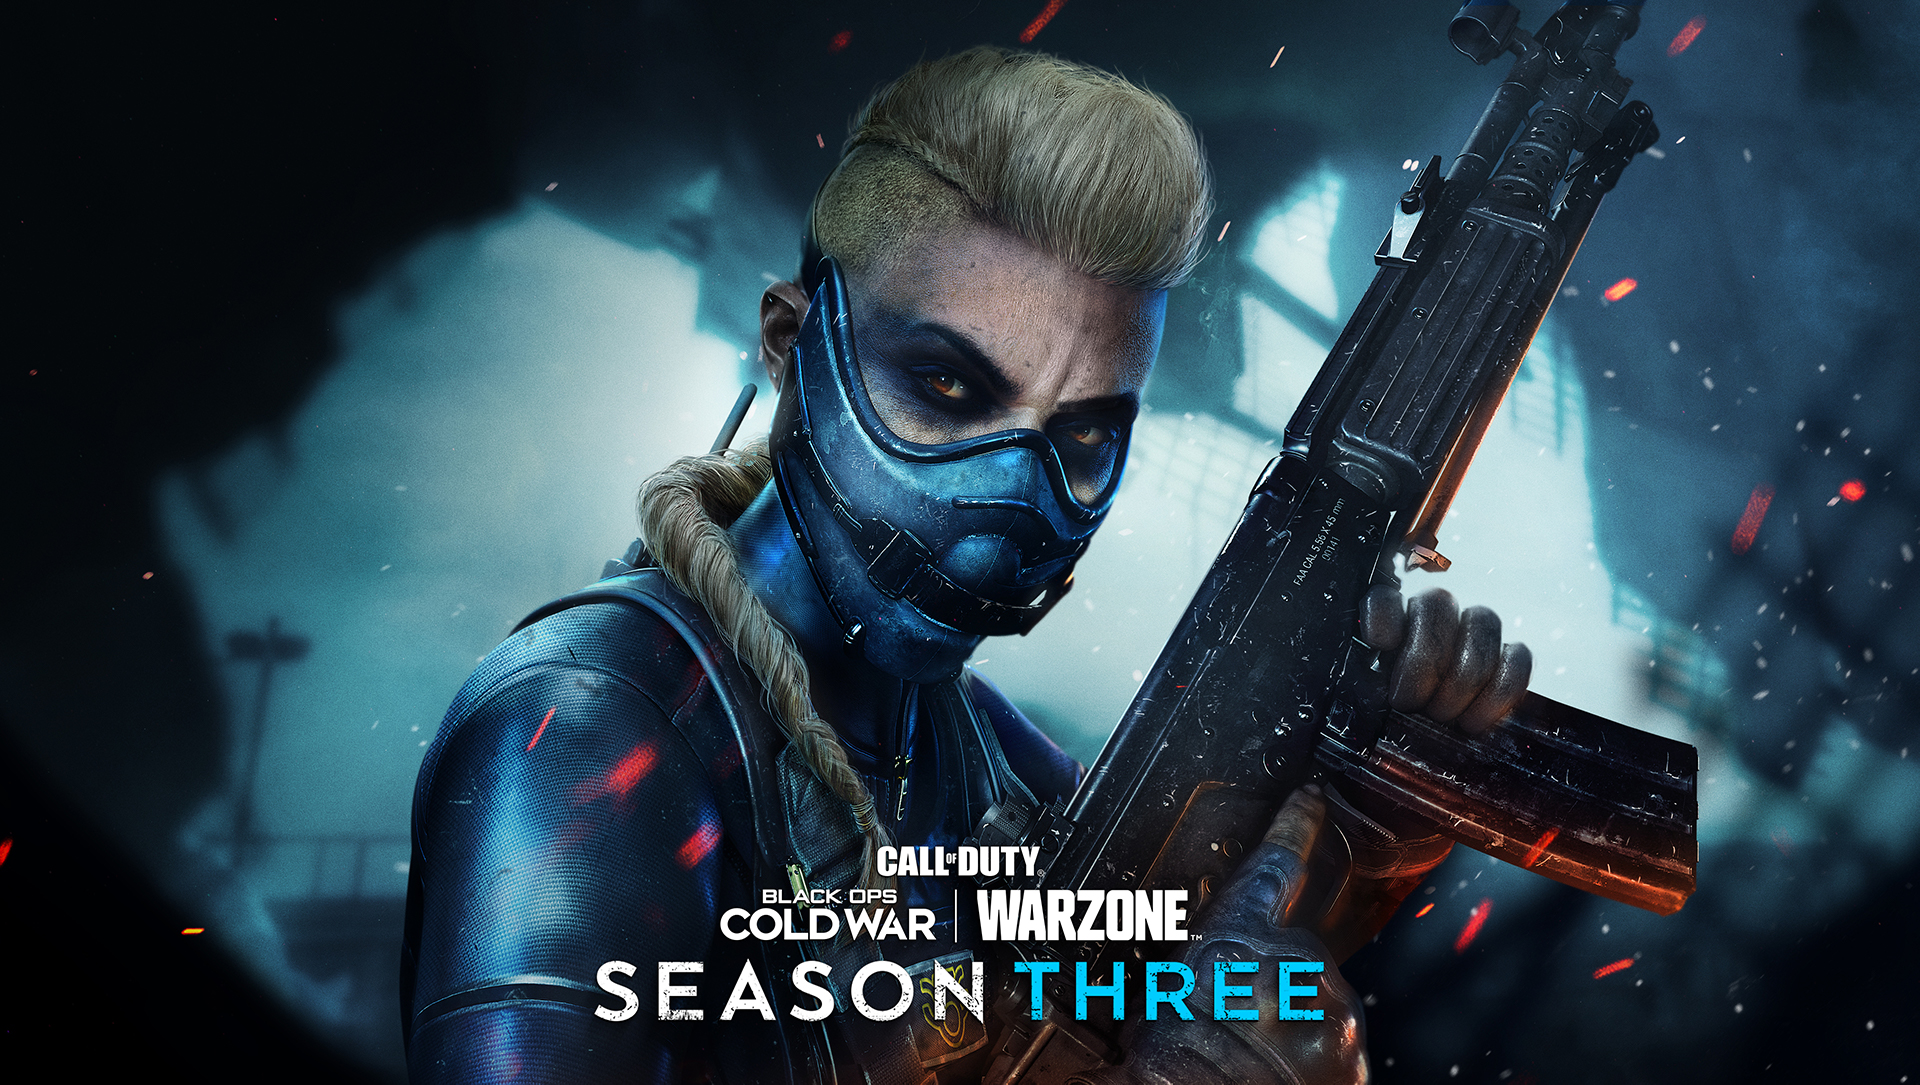 Warzone dev confirms Sniper Rifle nerfs coming in Season 3 - Charlie INTEL